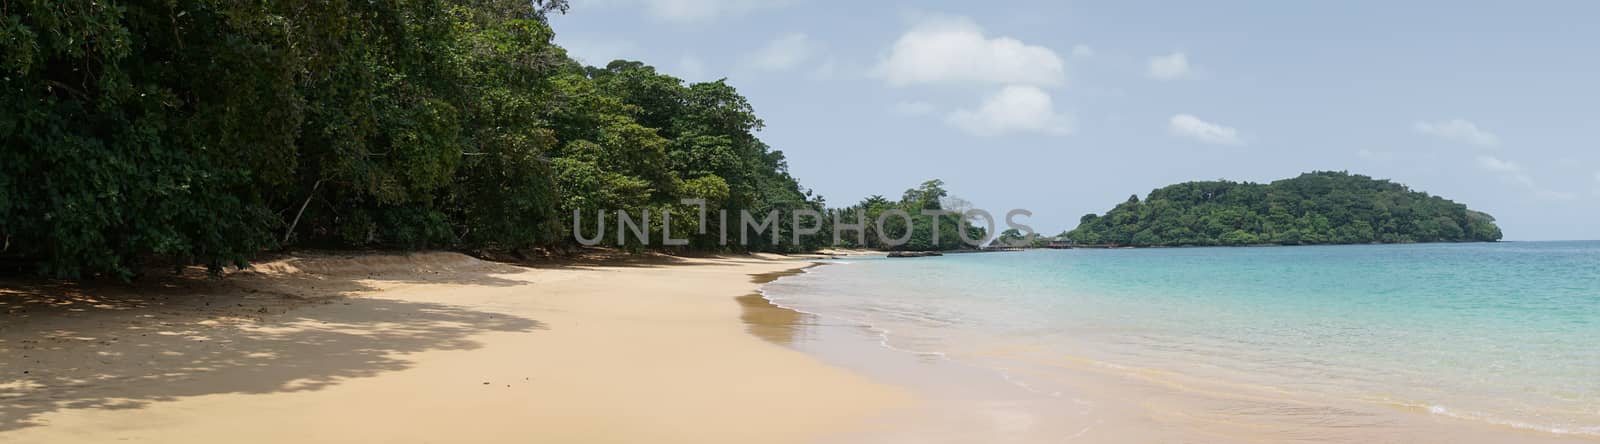 Praia Coco, Sao Tome and Principe, Africa by alfotokunst